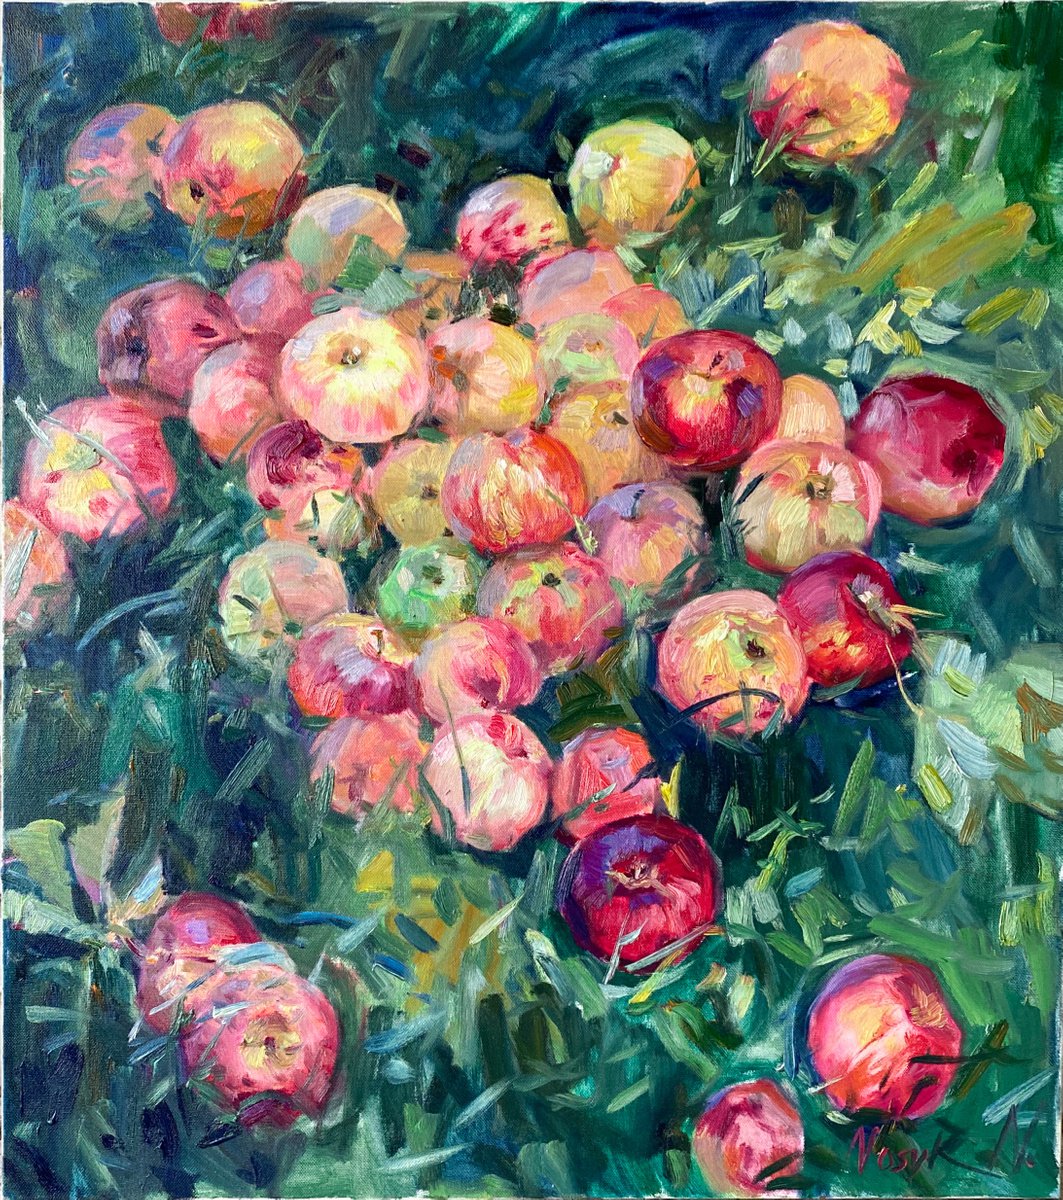 Apples from my garden| still life modern original oil painting by Nataliia Nosyk